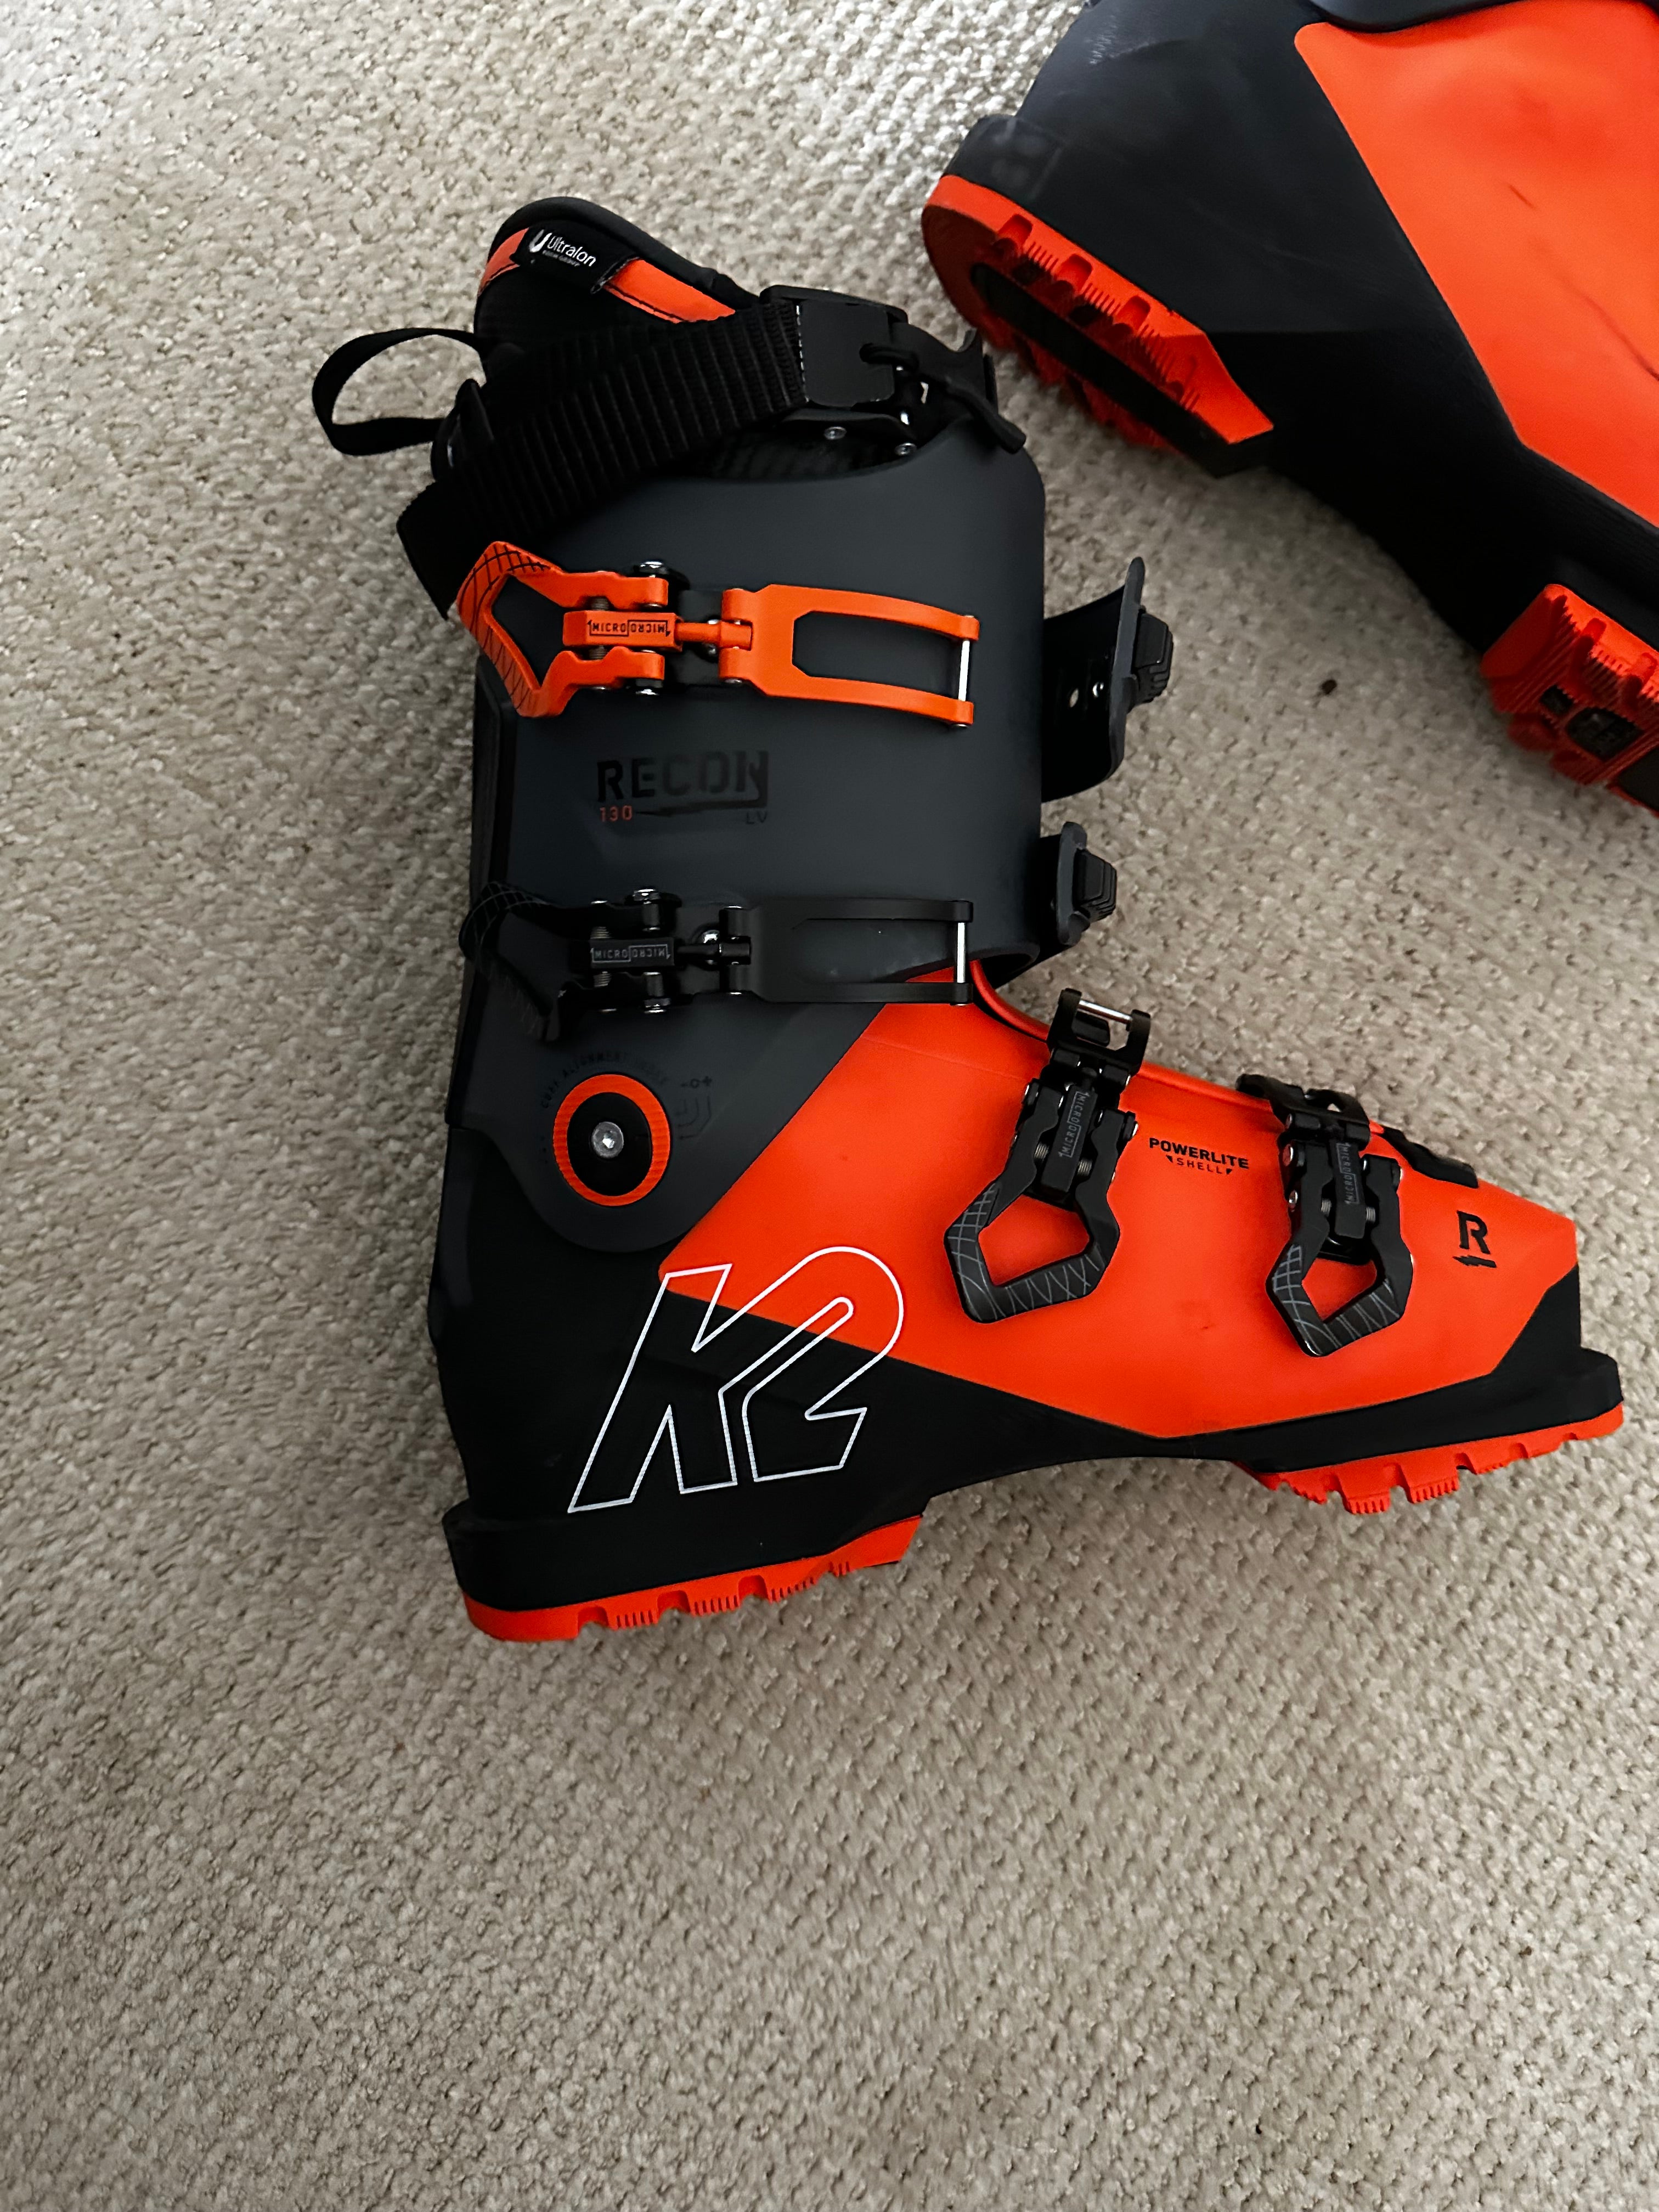 K2 Recon 130 LV Ski Boots Mens